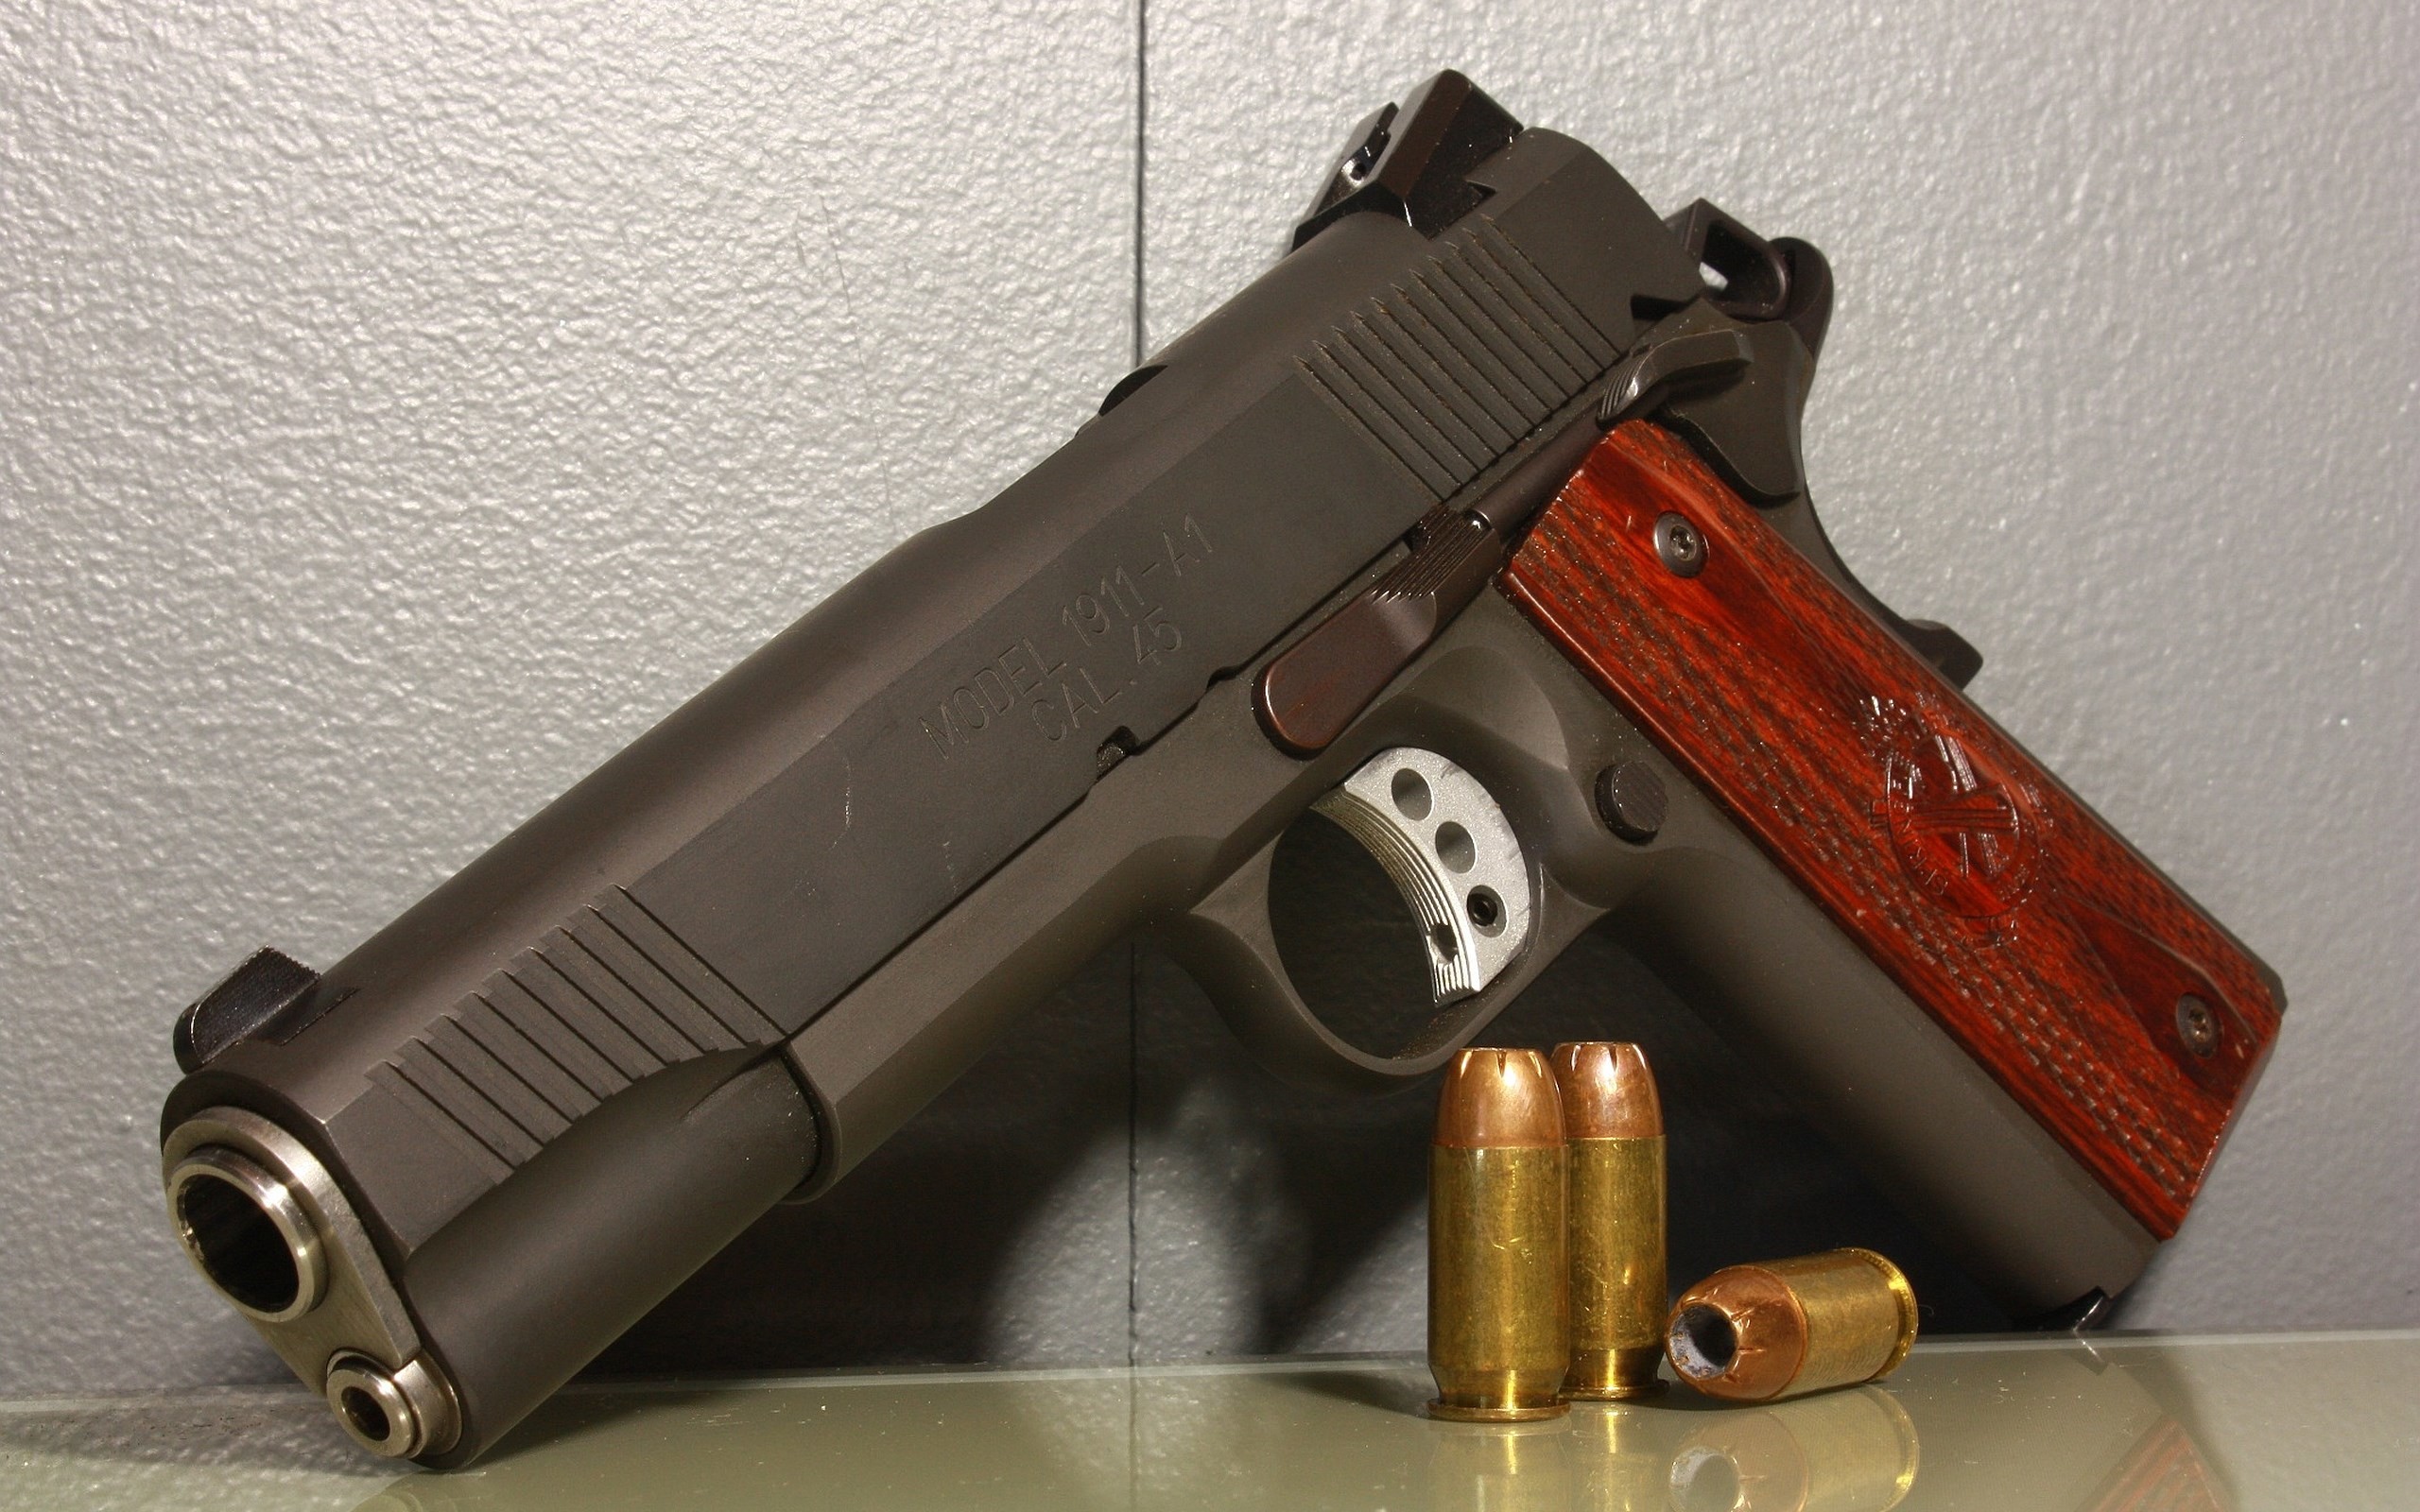 2560x1600 Amazing springfield armory 1911 pistol